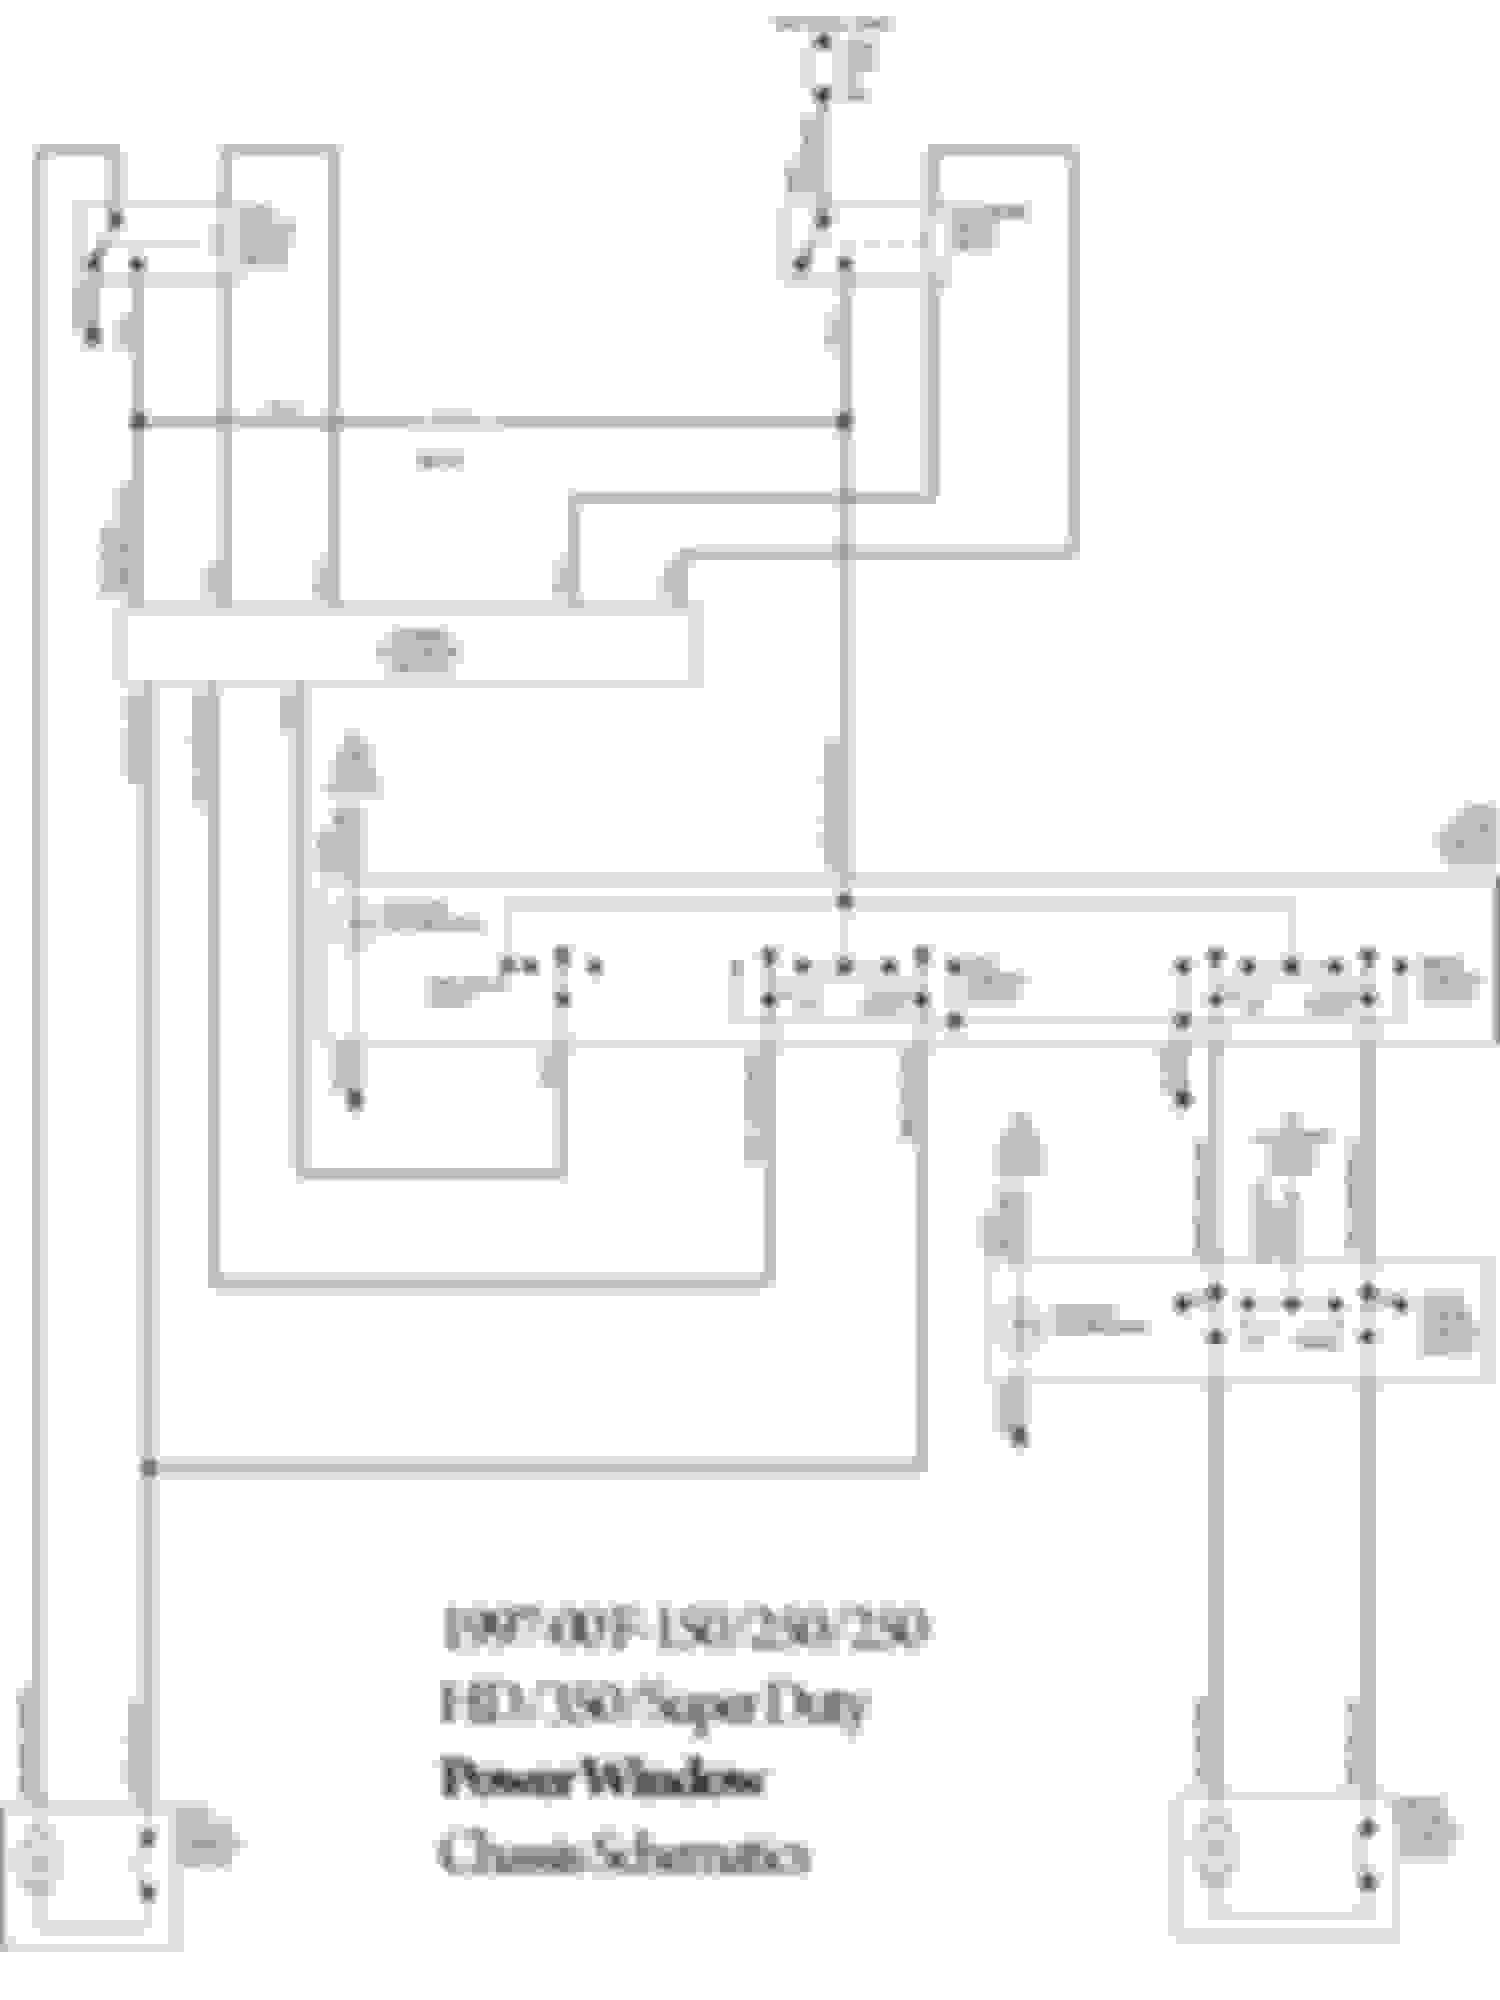 1998 Ford F 150 Power Window Switch Wiring - Cars Wiring Diagram Blog